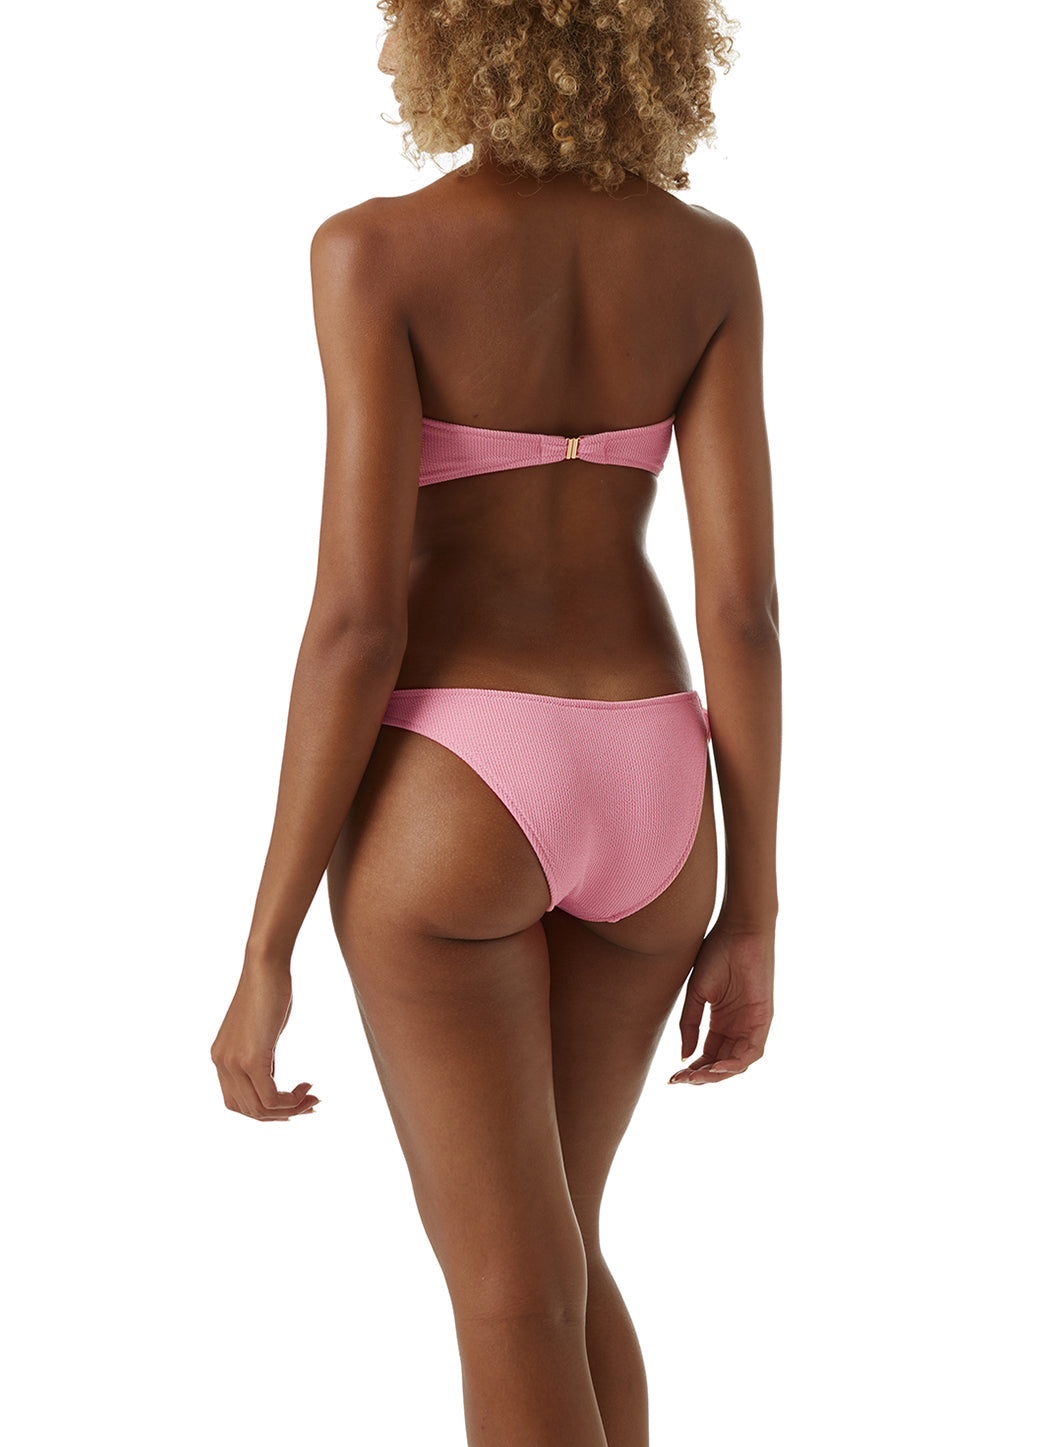 Tortola_Rose_Ridges_Bikini_Model_B